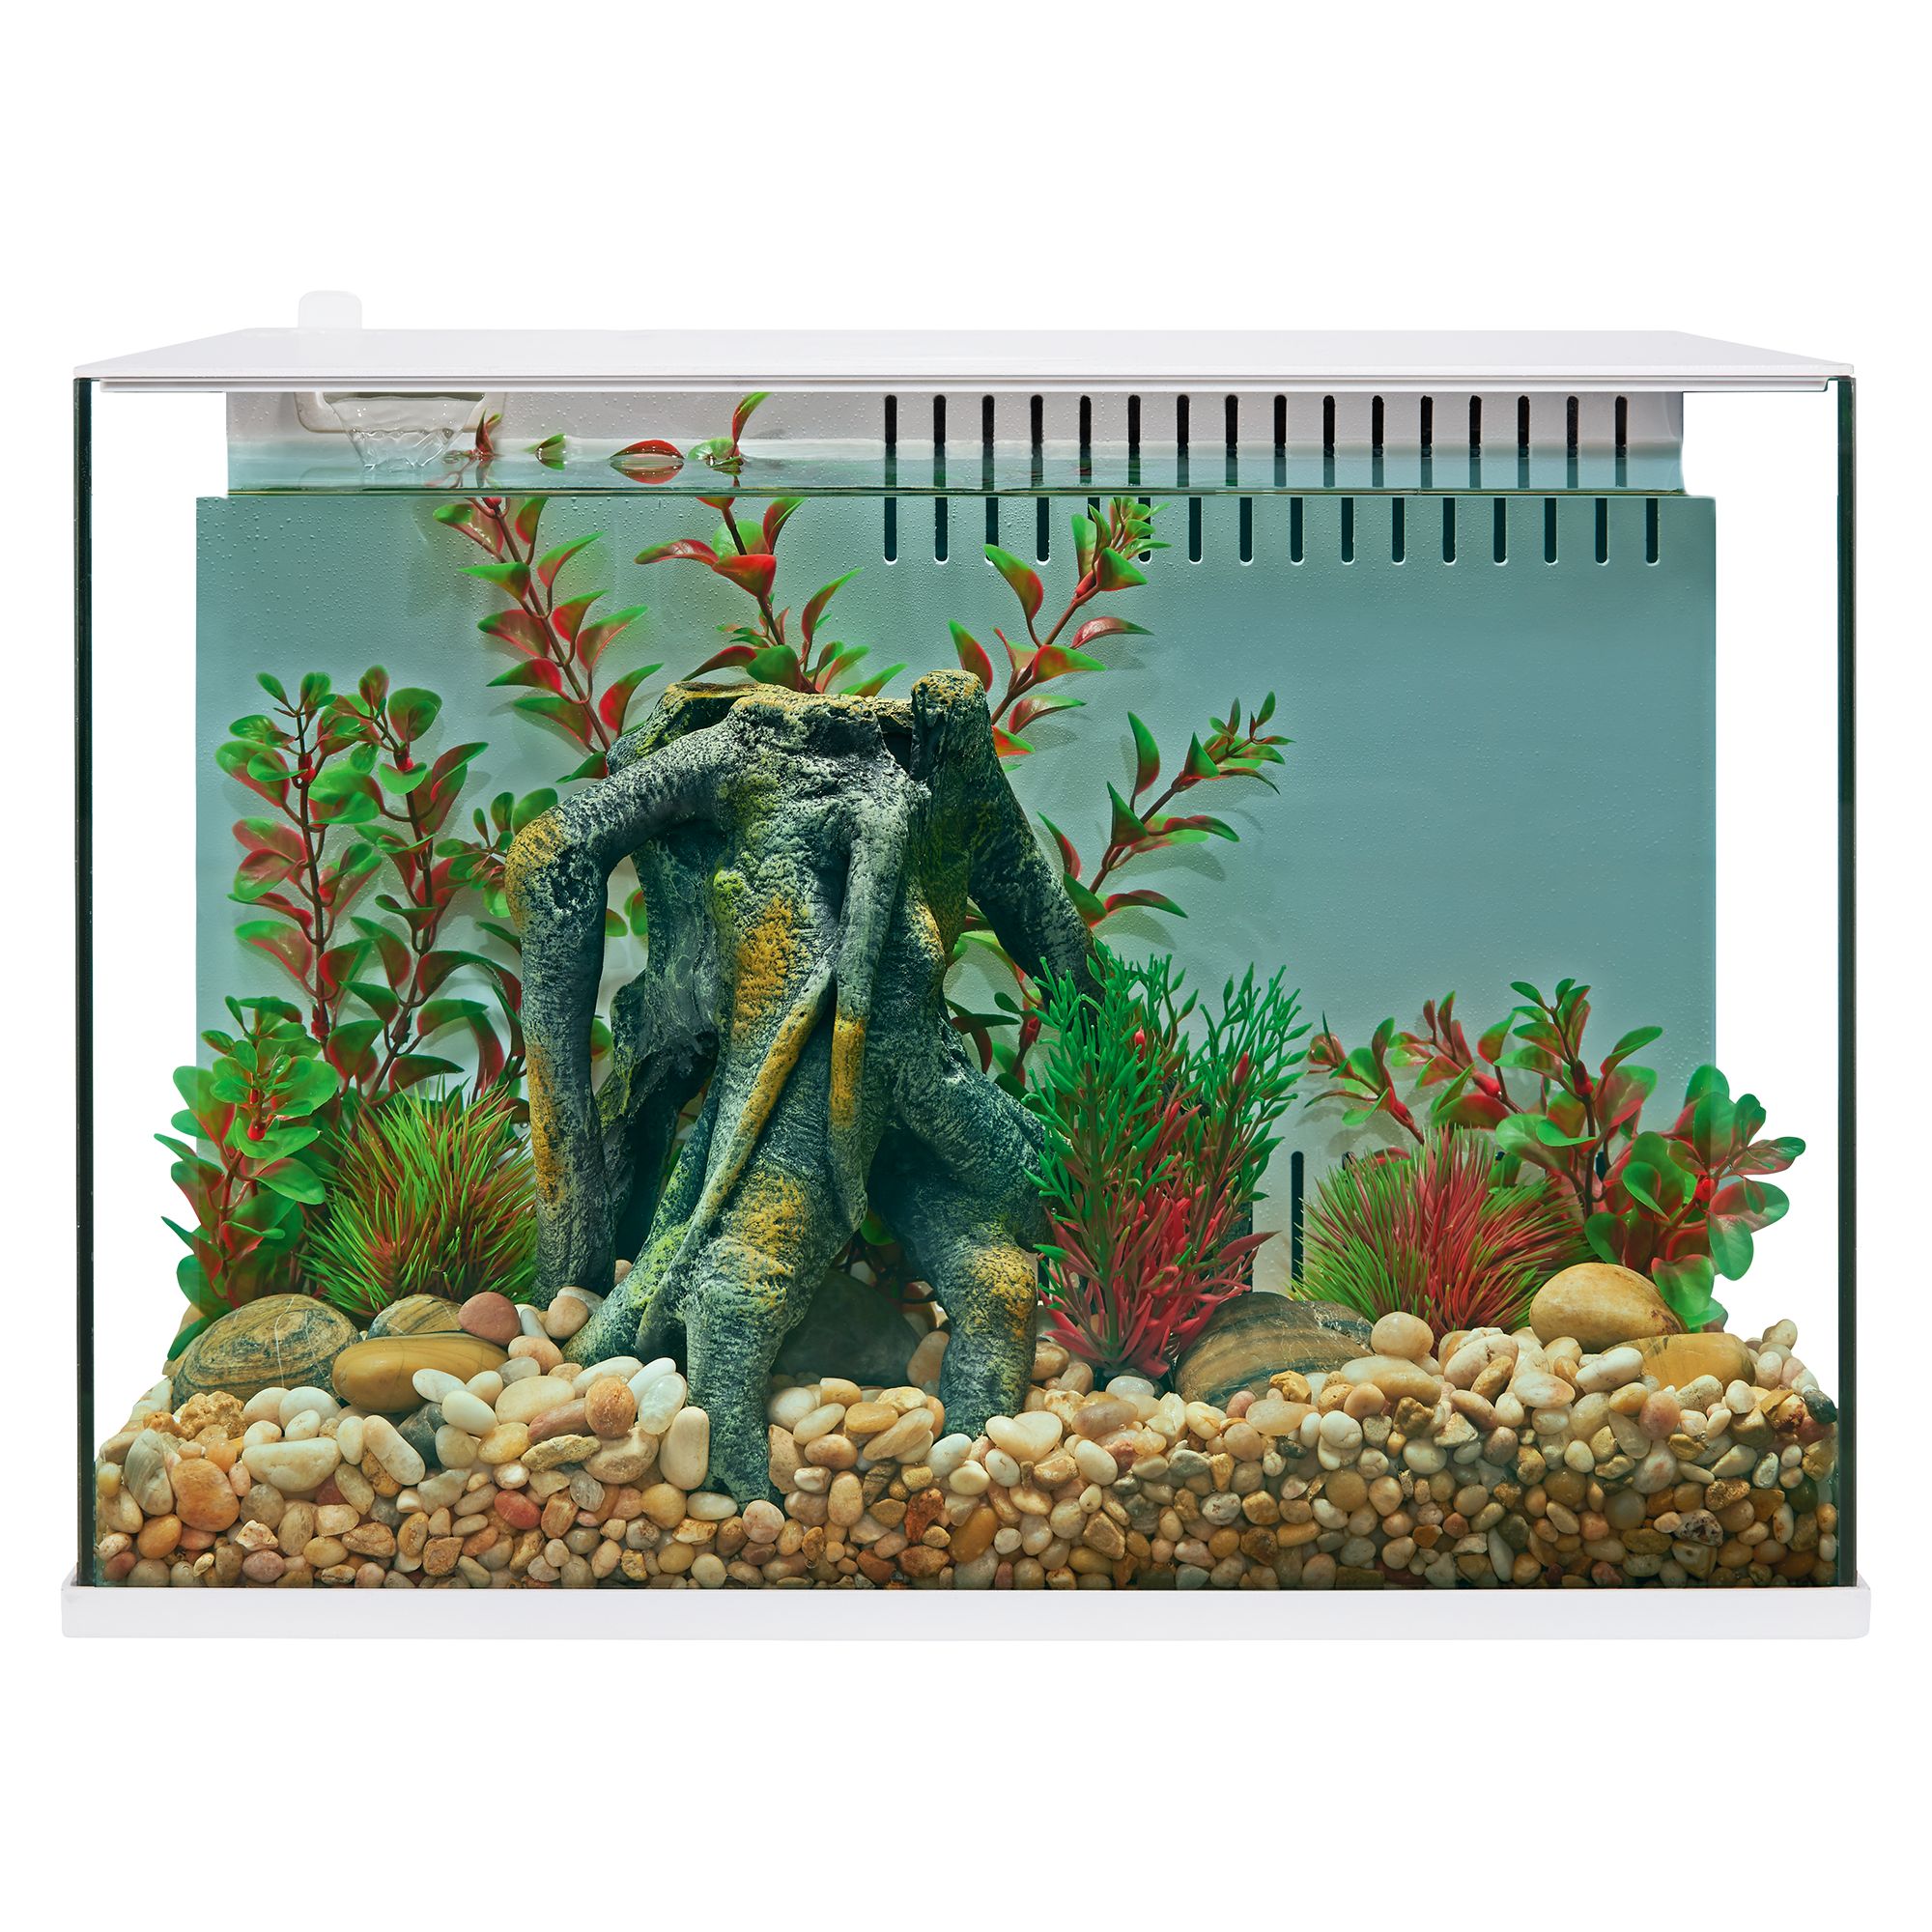 Top Fin® Easy Clean Aquarium - 5 Gallon